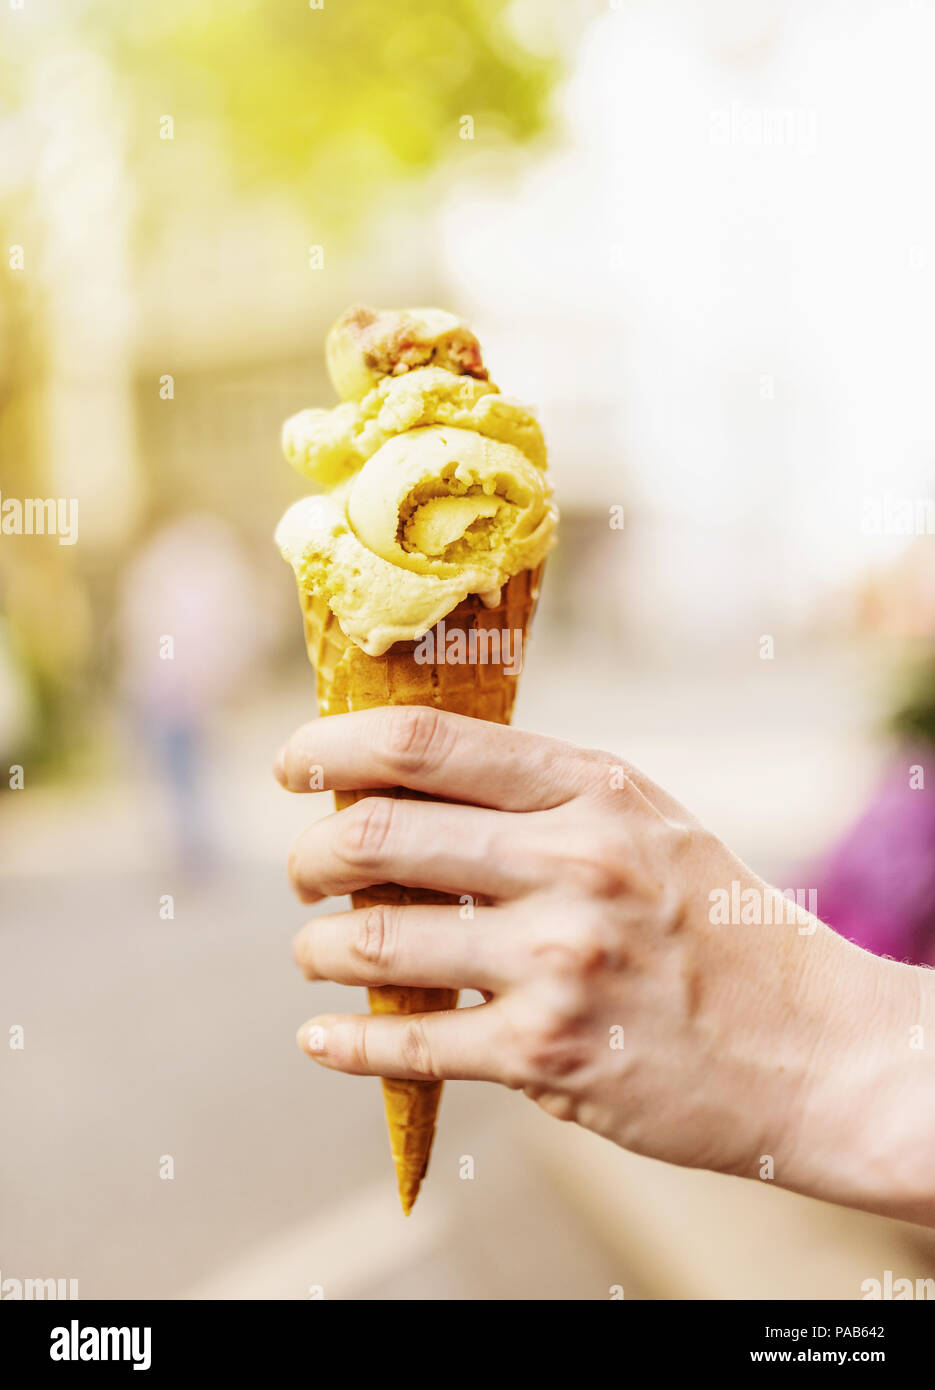 female hand holding ice cream cone Stock Photo